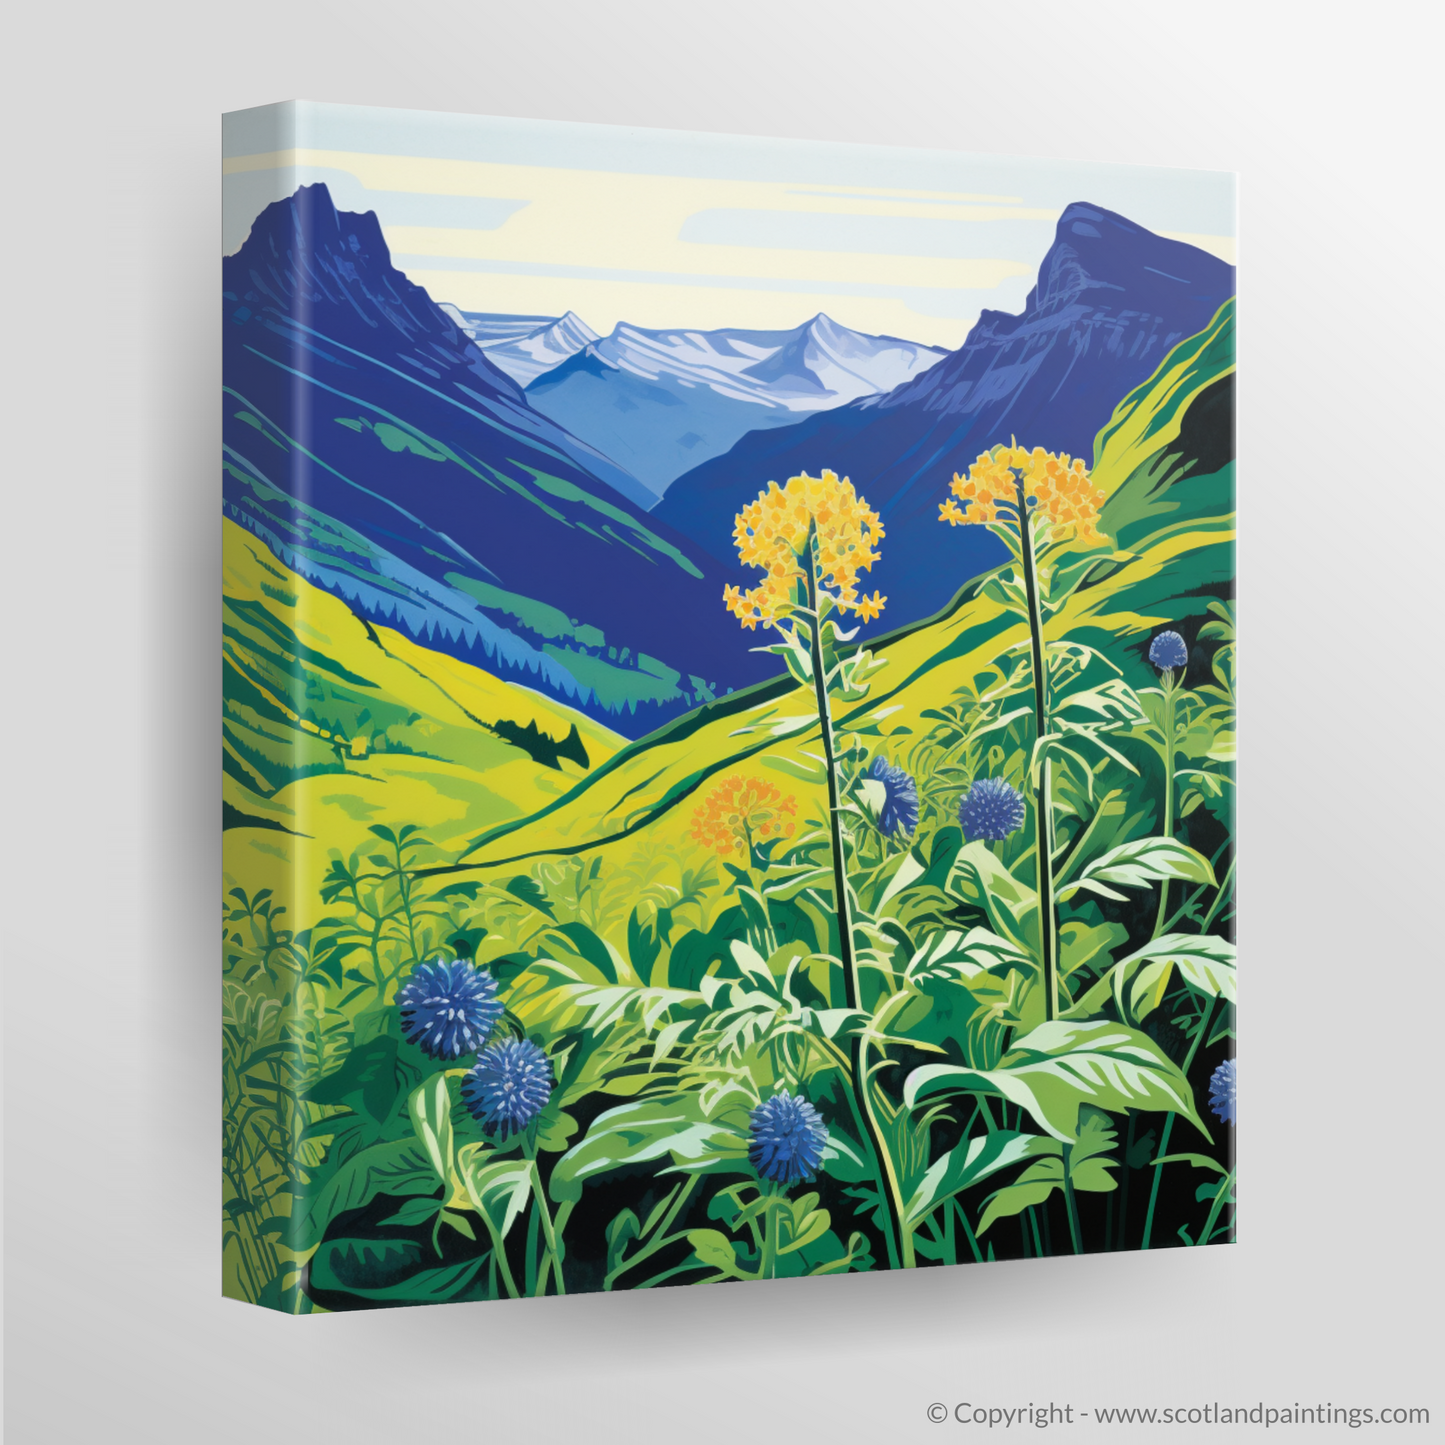 Vibrant Highland Flora: Alpine Lady's-Mantle on Ben Lawers